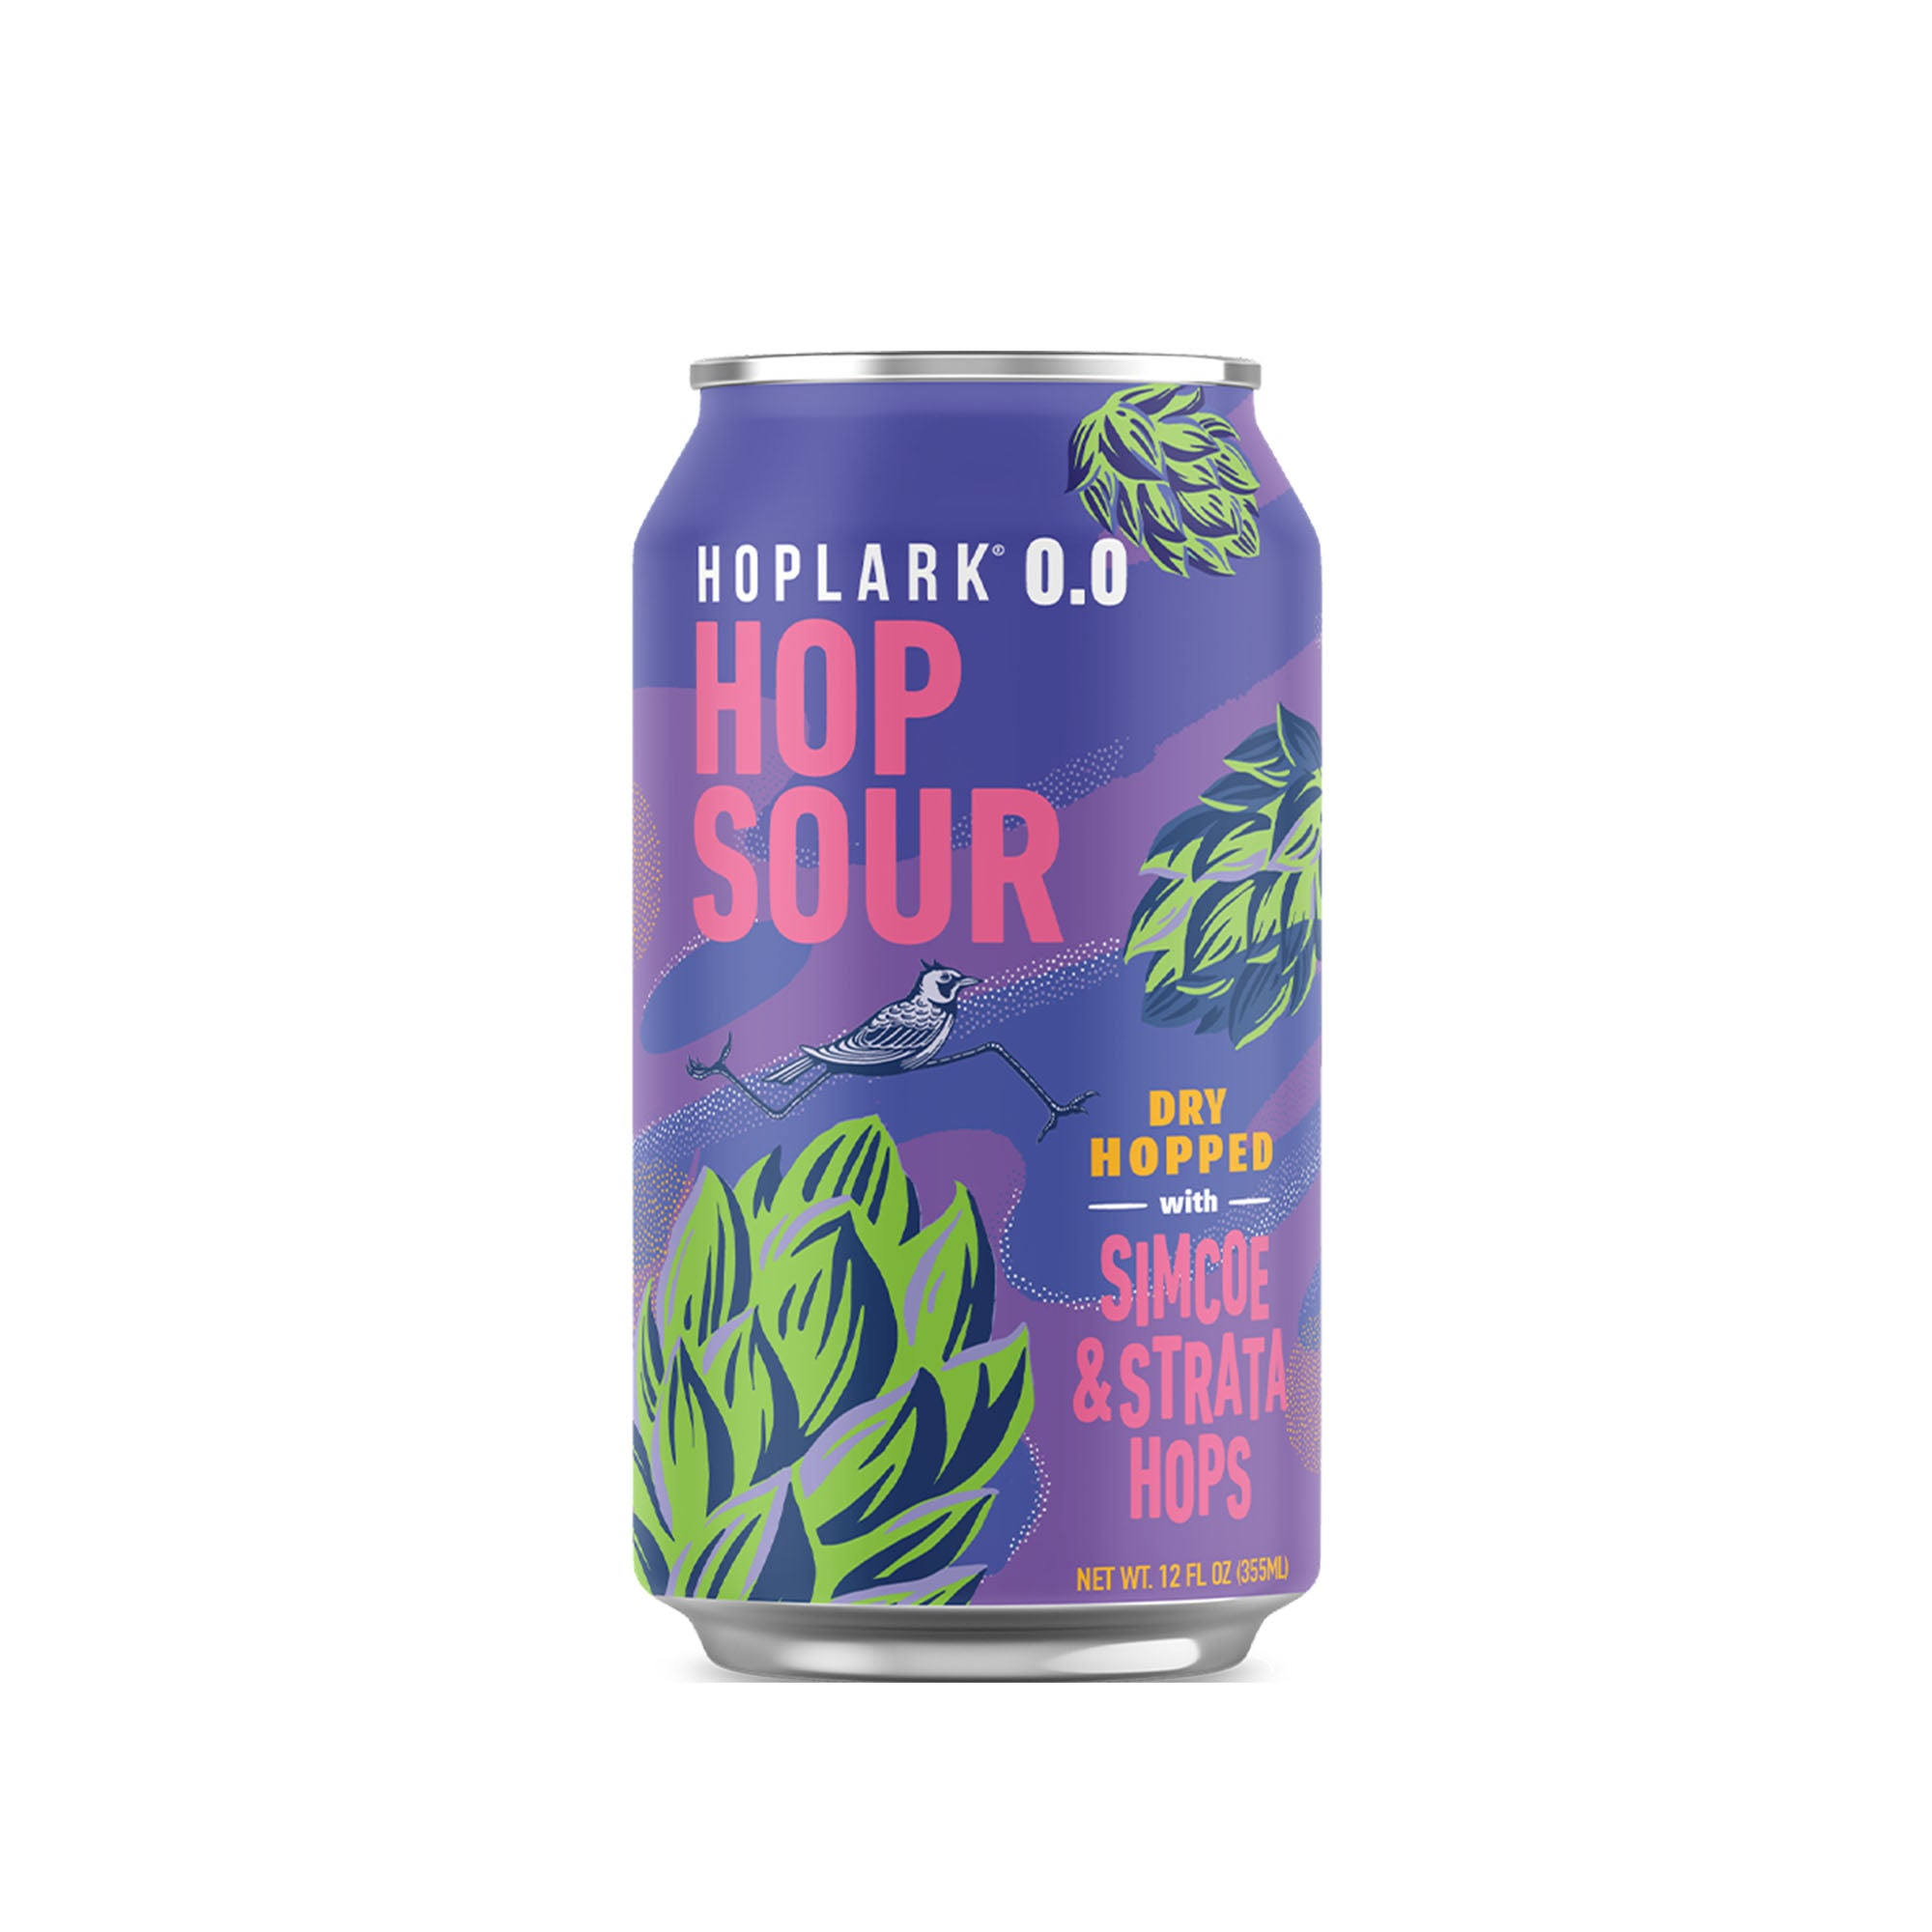 Hoplark Non-Alcoholic 0.0 Hop Sour - 12 fl oz